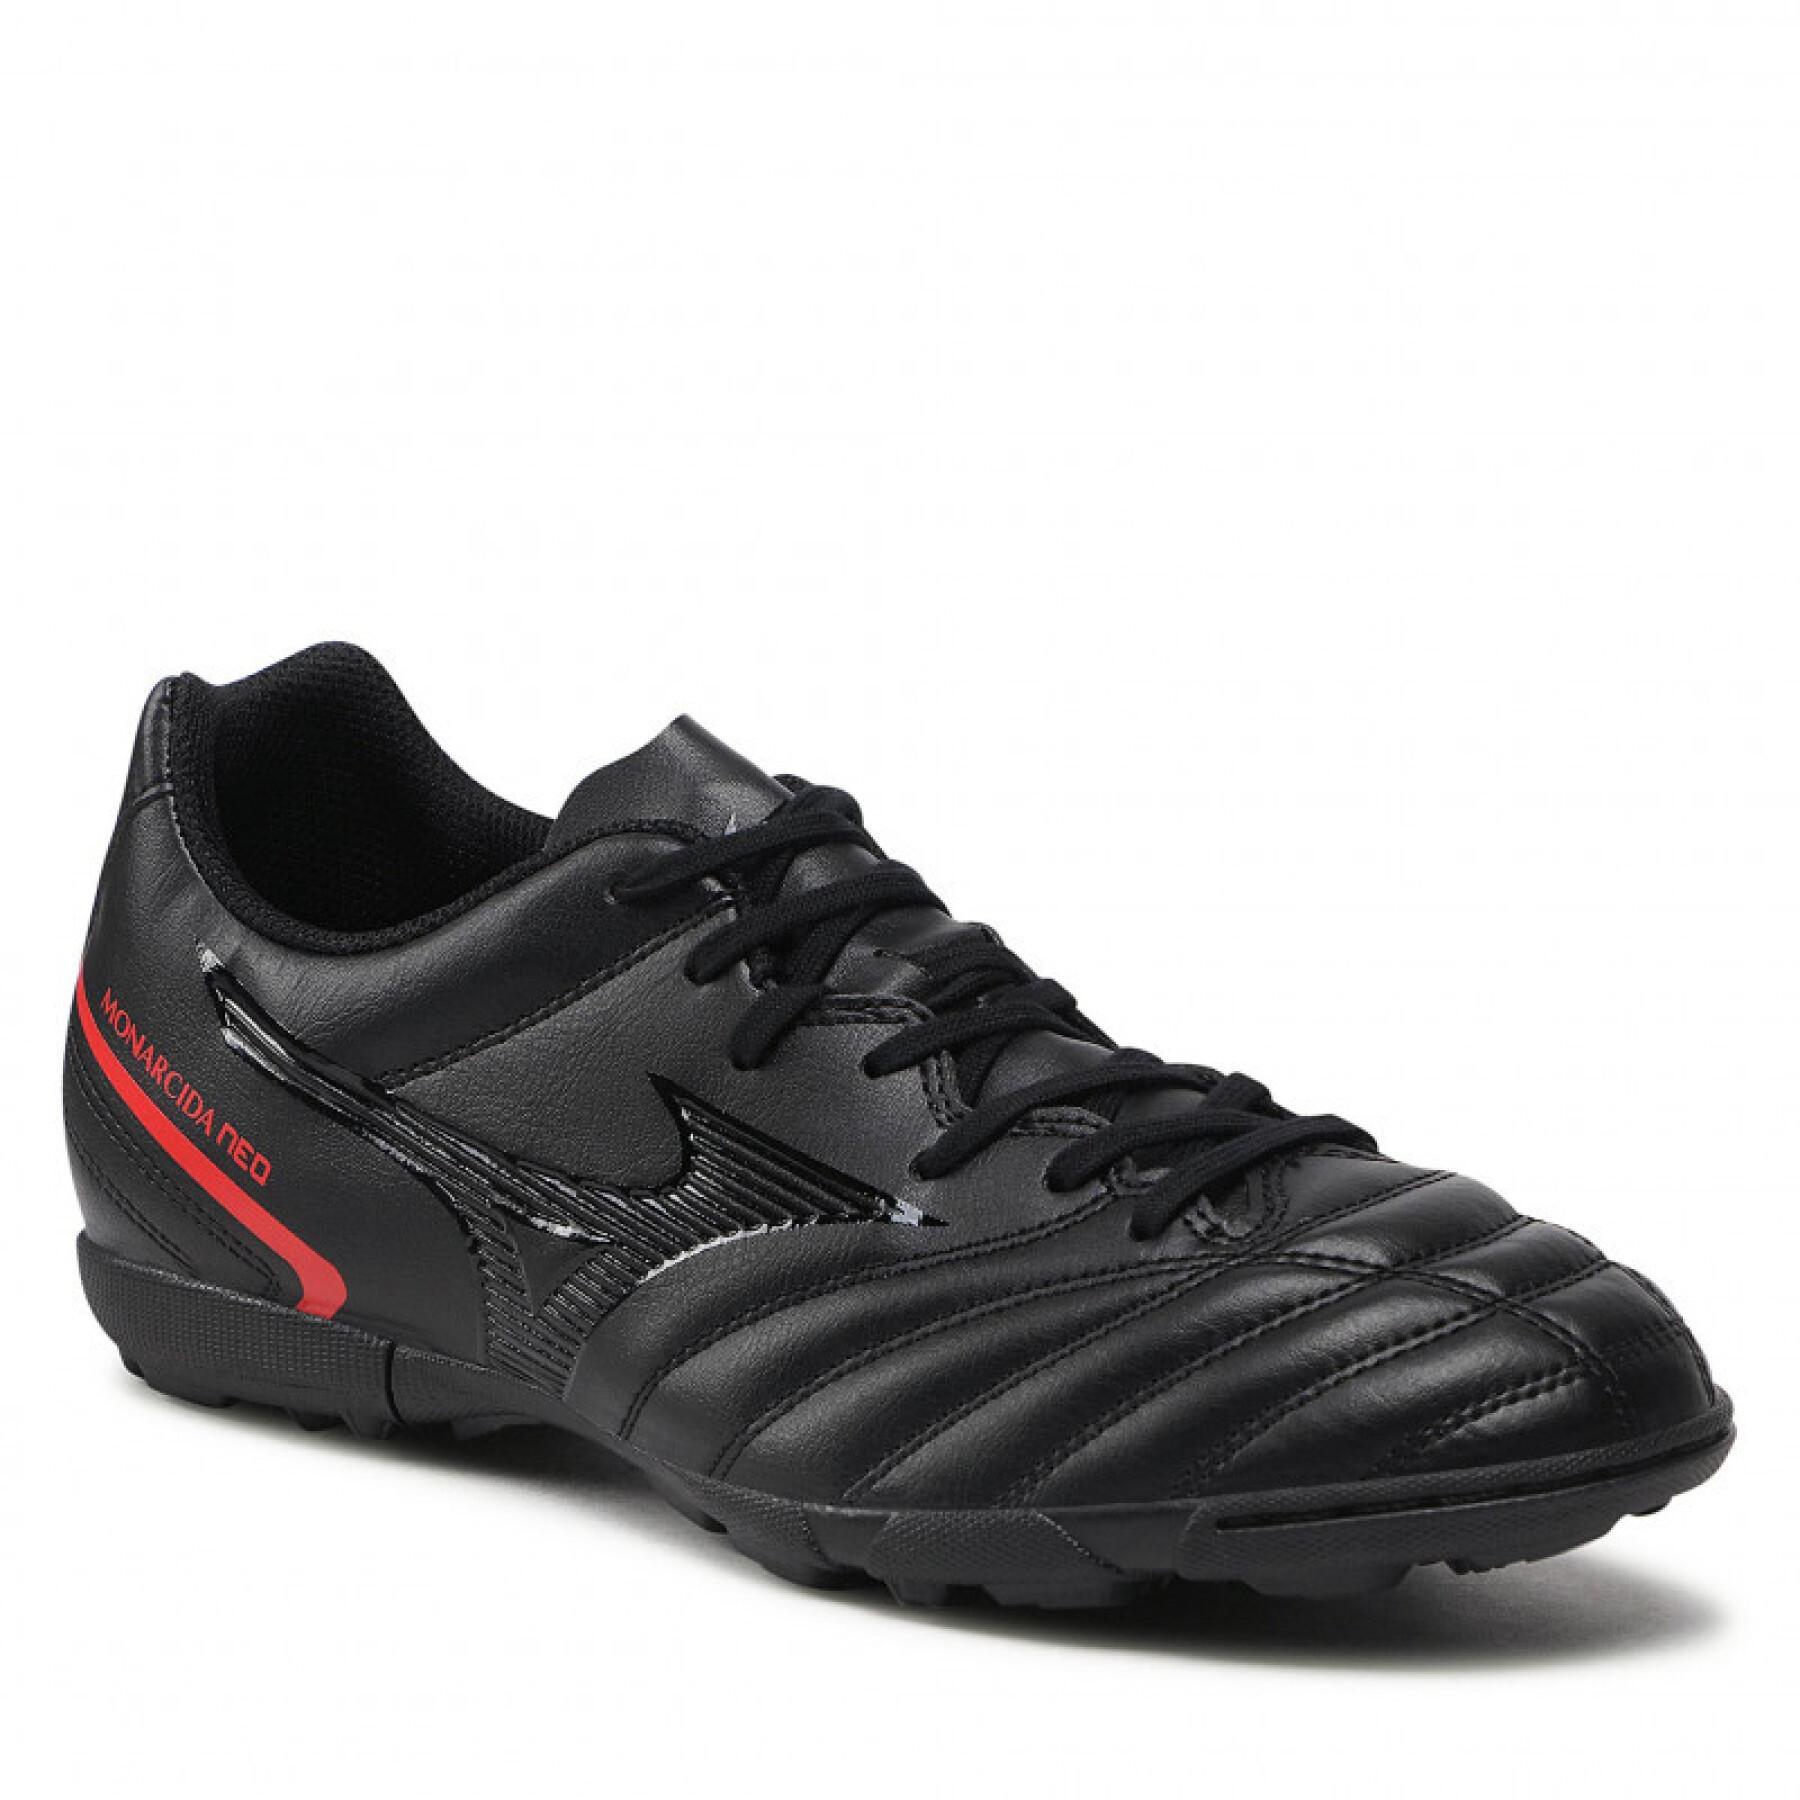 Soccer shoes Mizuno Monarcida Neo Select AS.Turf